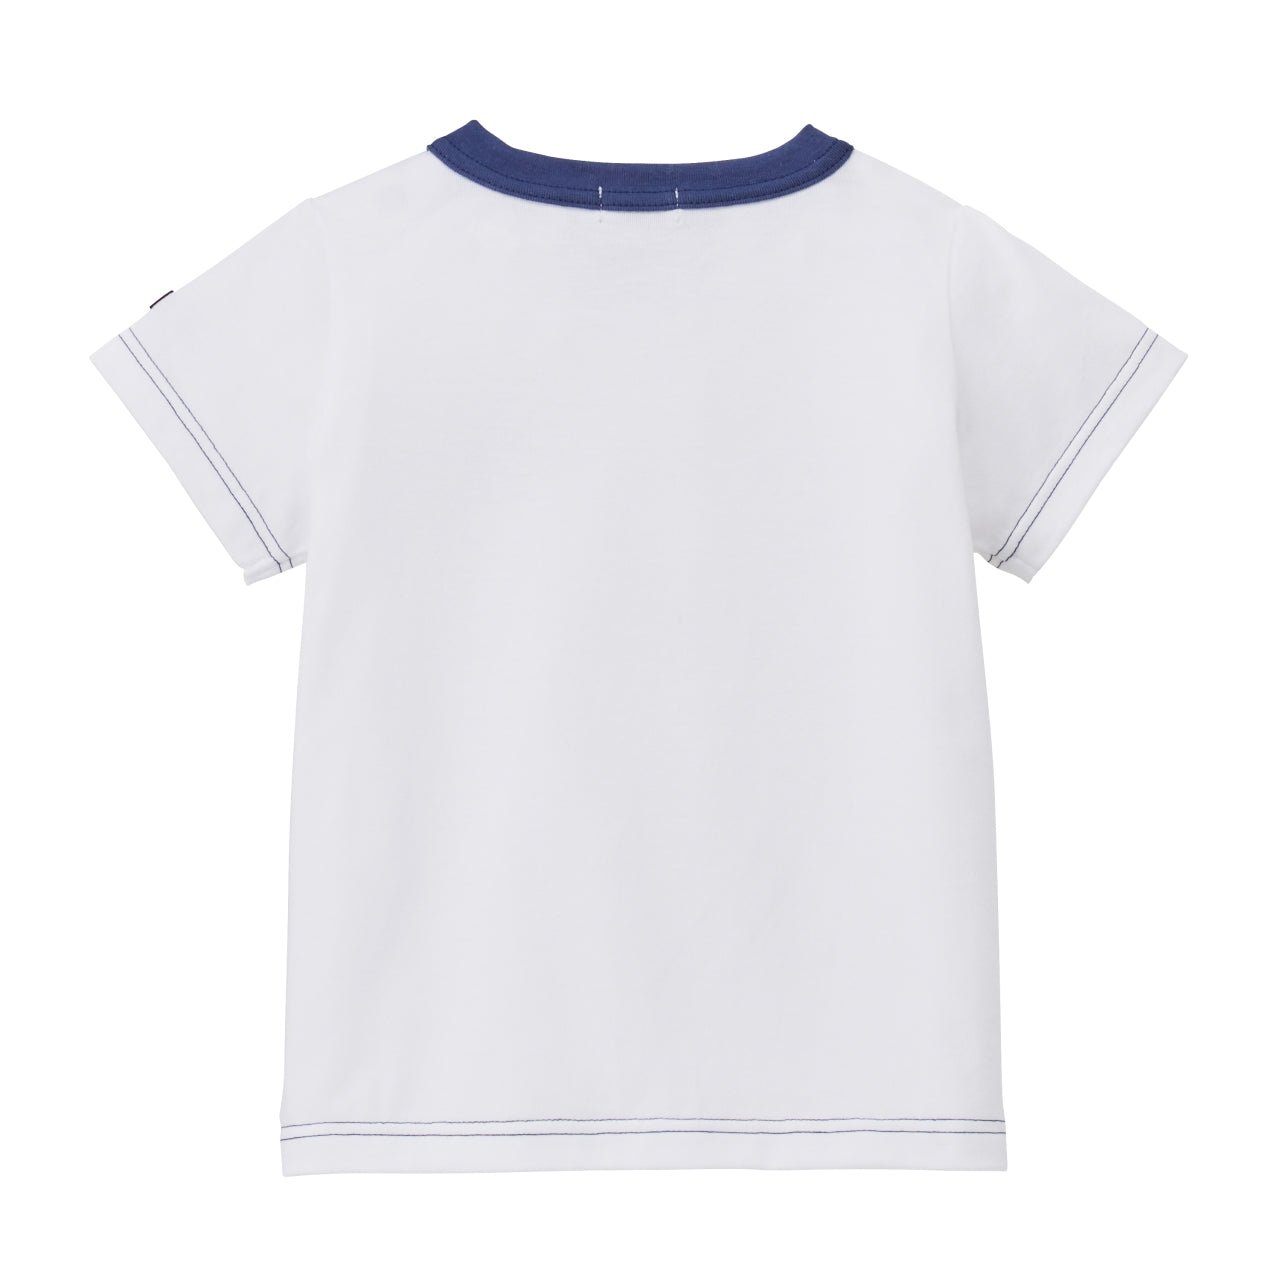 DOUBLE_B Classic T-Shirt-White - 60-5224-577-01-80